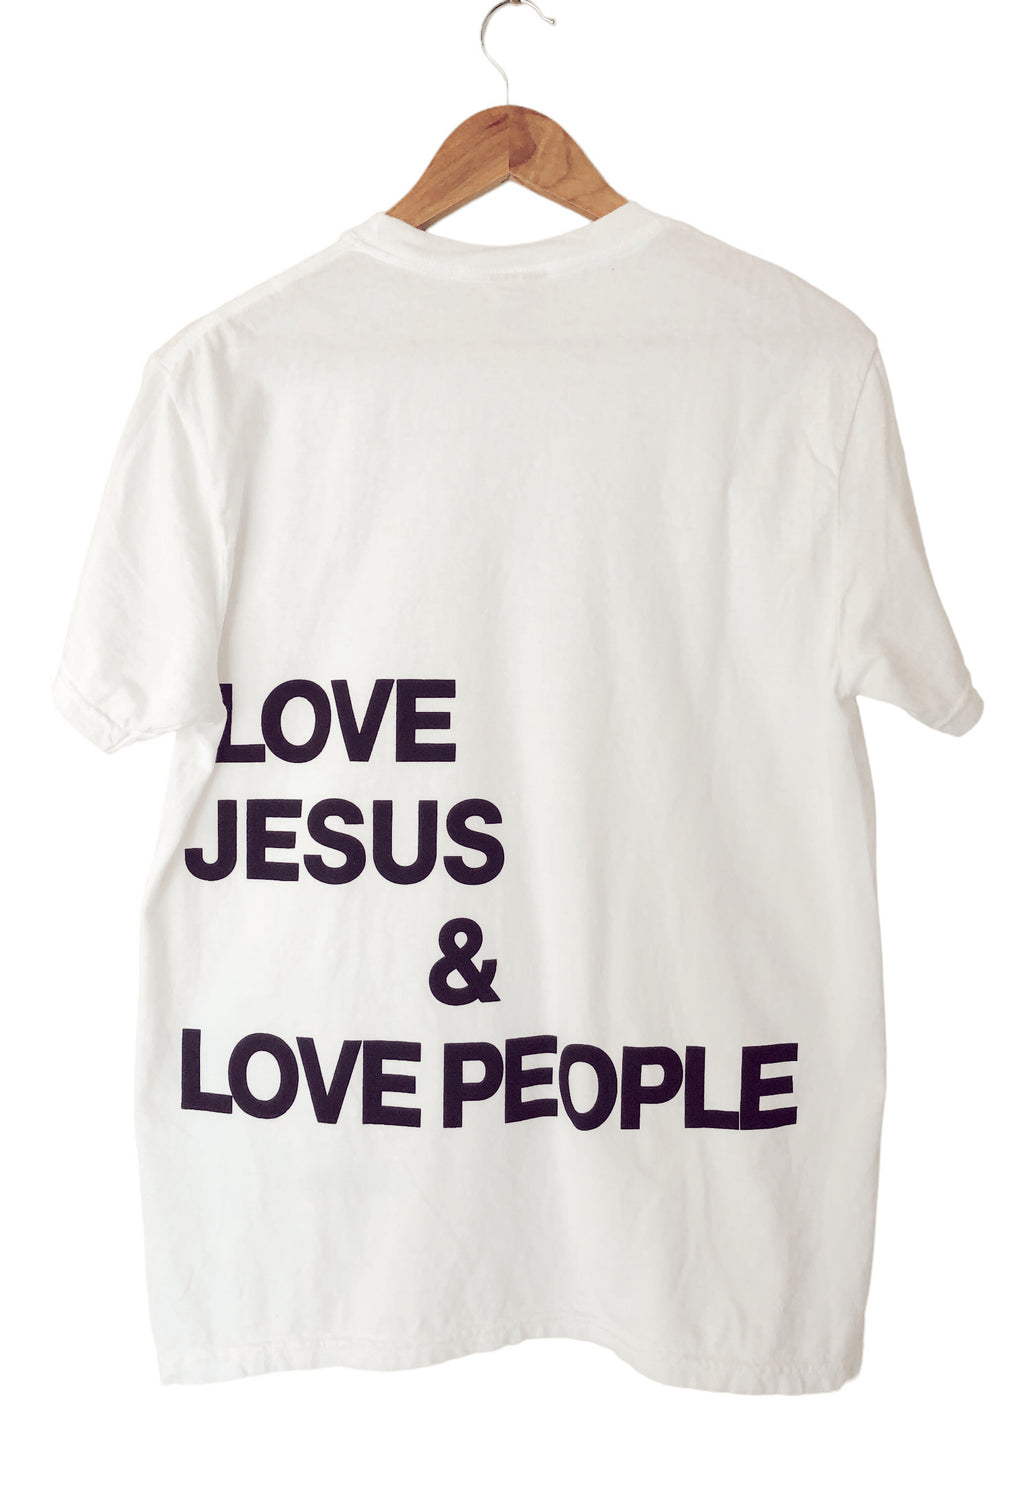 LOVE JESUS & LOVE PEOPLE WHITE SLEEVE T-SHIRT